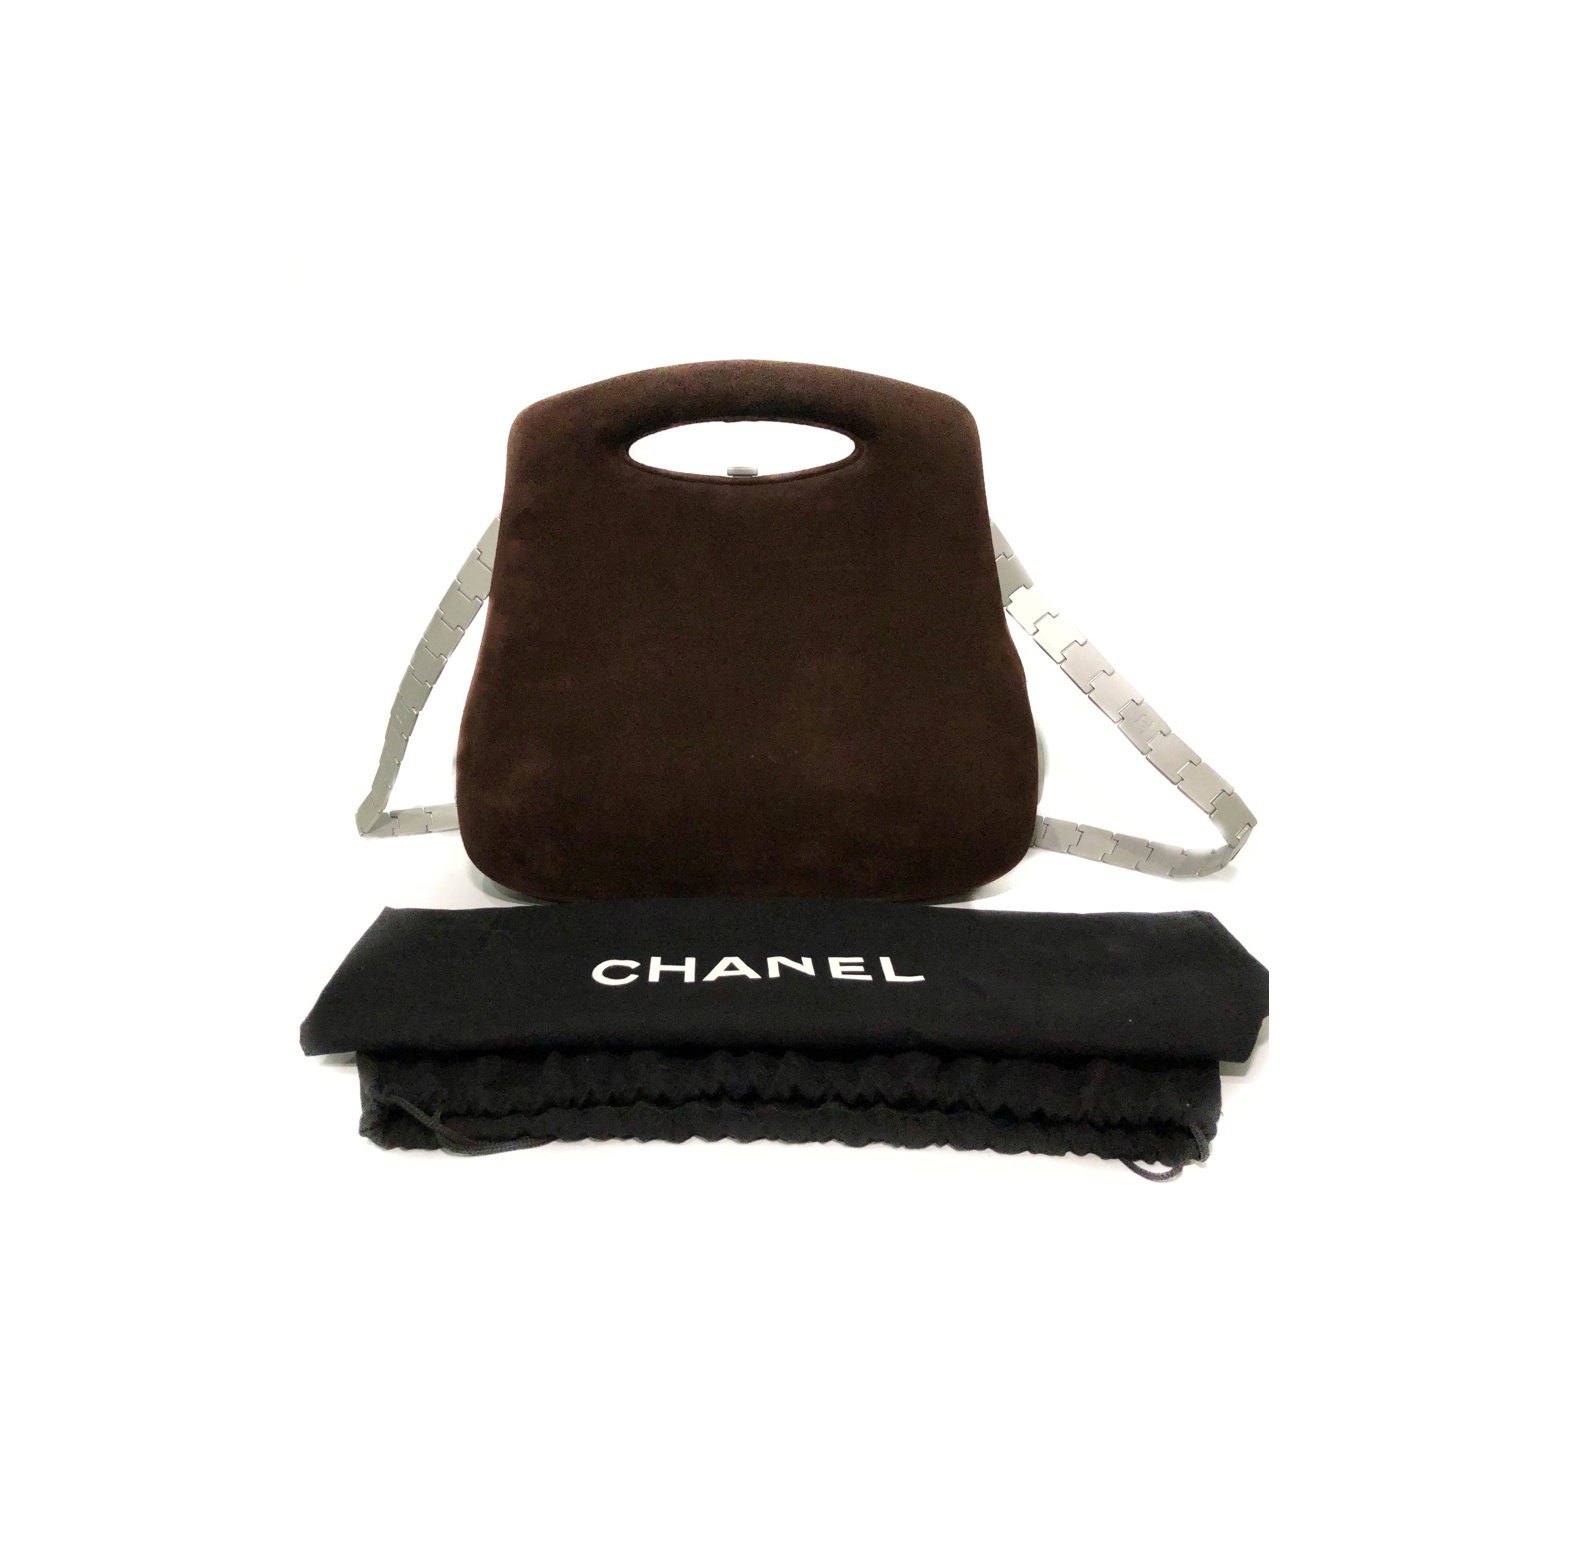 Chanel Futuristic Hard Case Handbag Chanel Brown Bag Chanel 